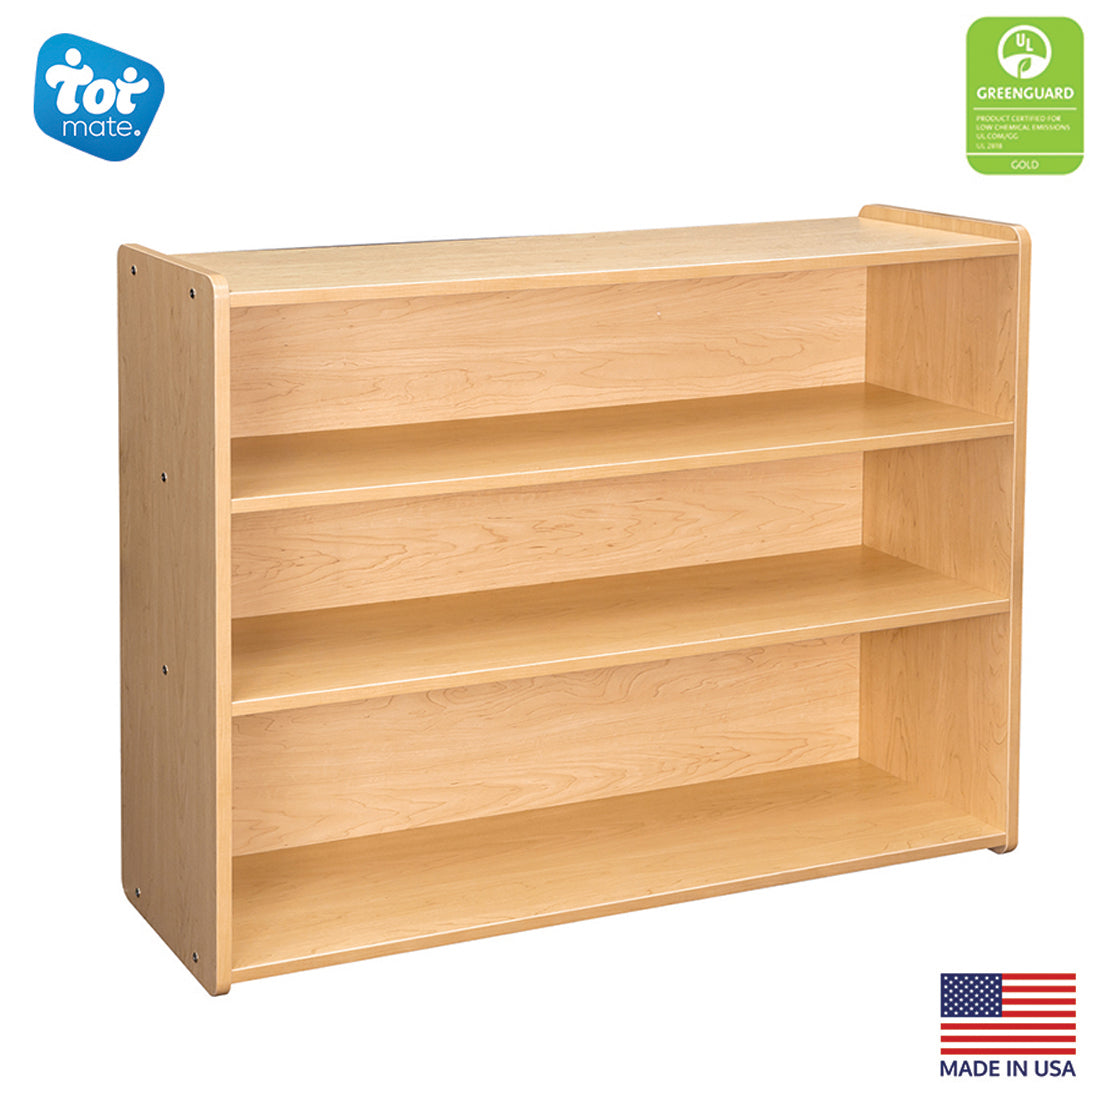 Book/Toy Storage, Assembled - Tot Mate TM2181A.0577